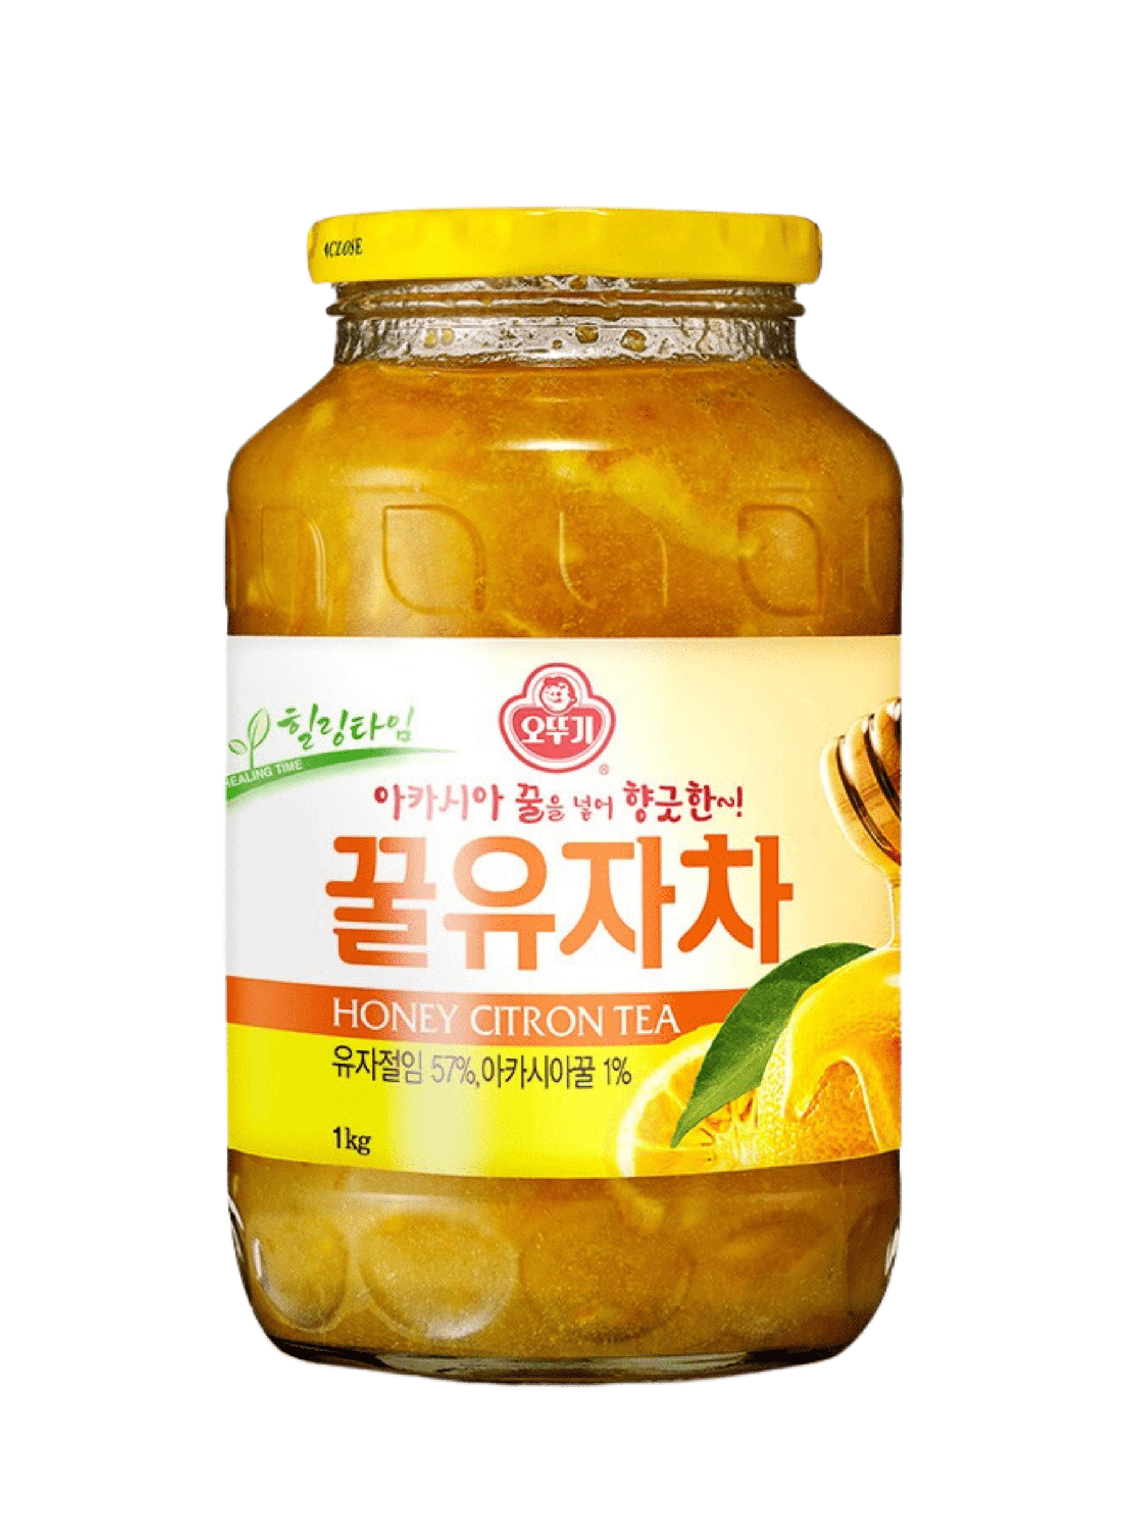 Honey Citron main image